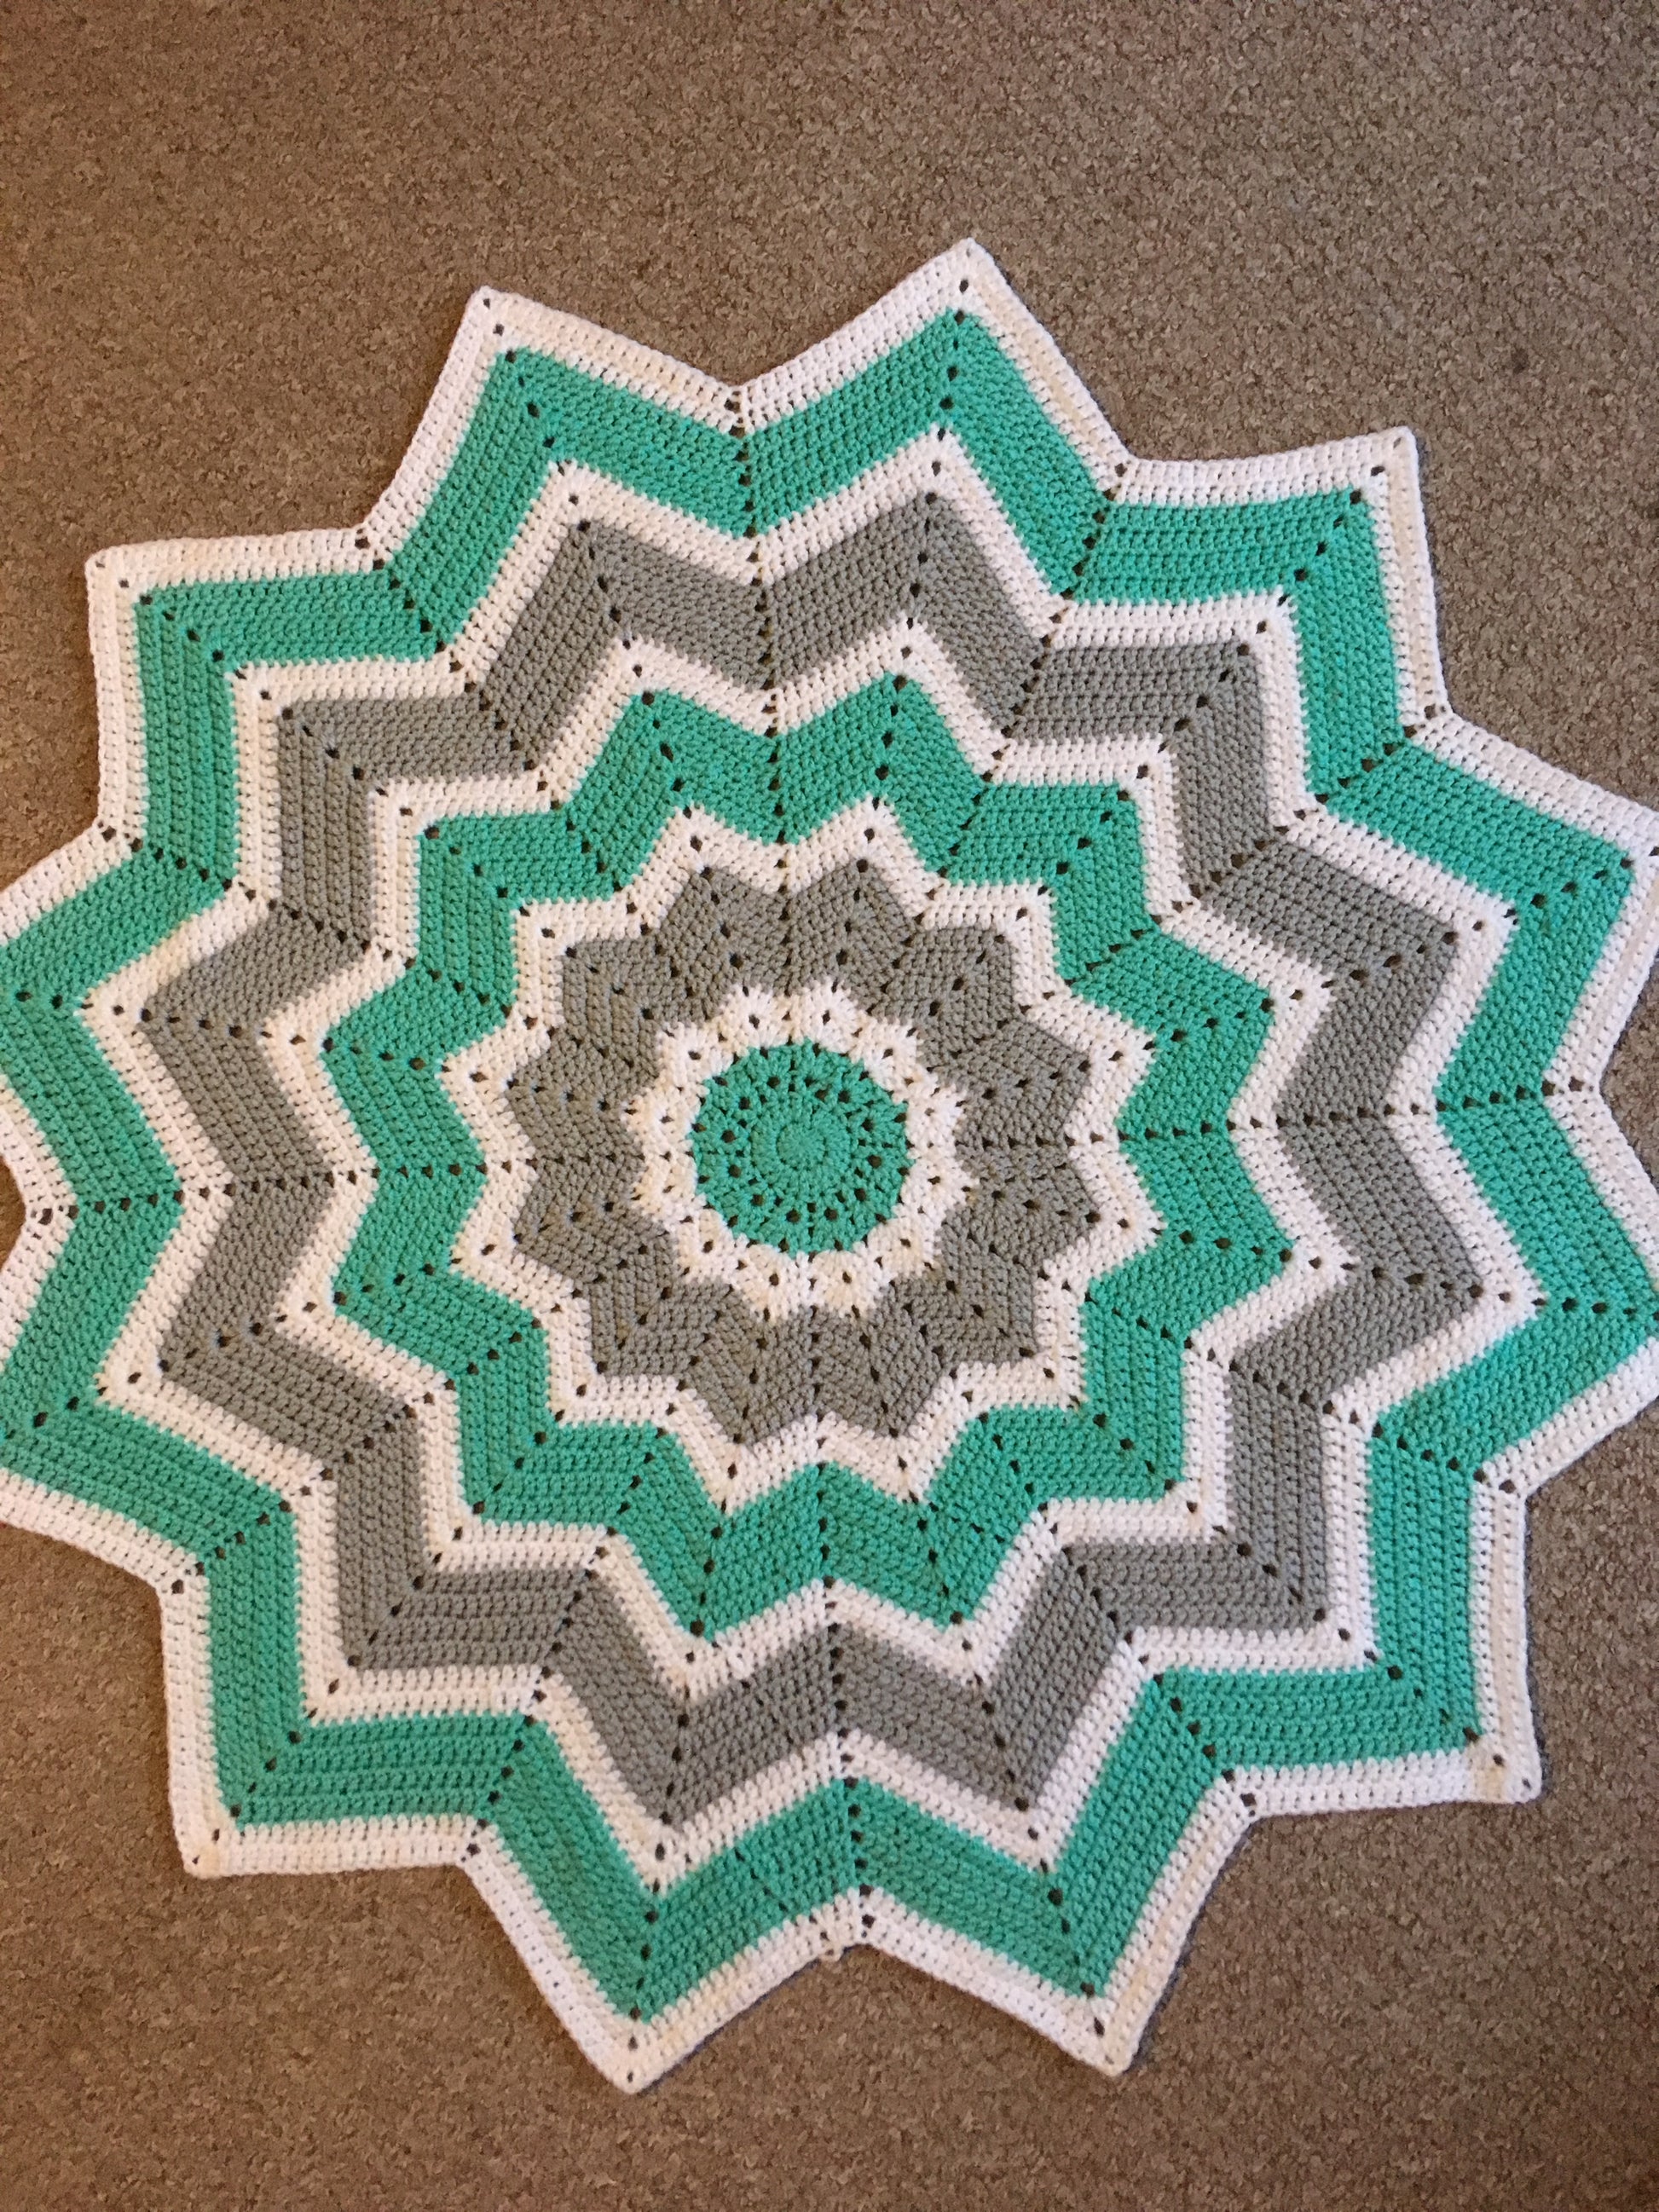 12 Point Star Blanket - Bella Coco Crochet